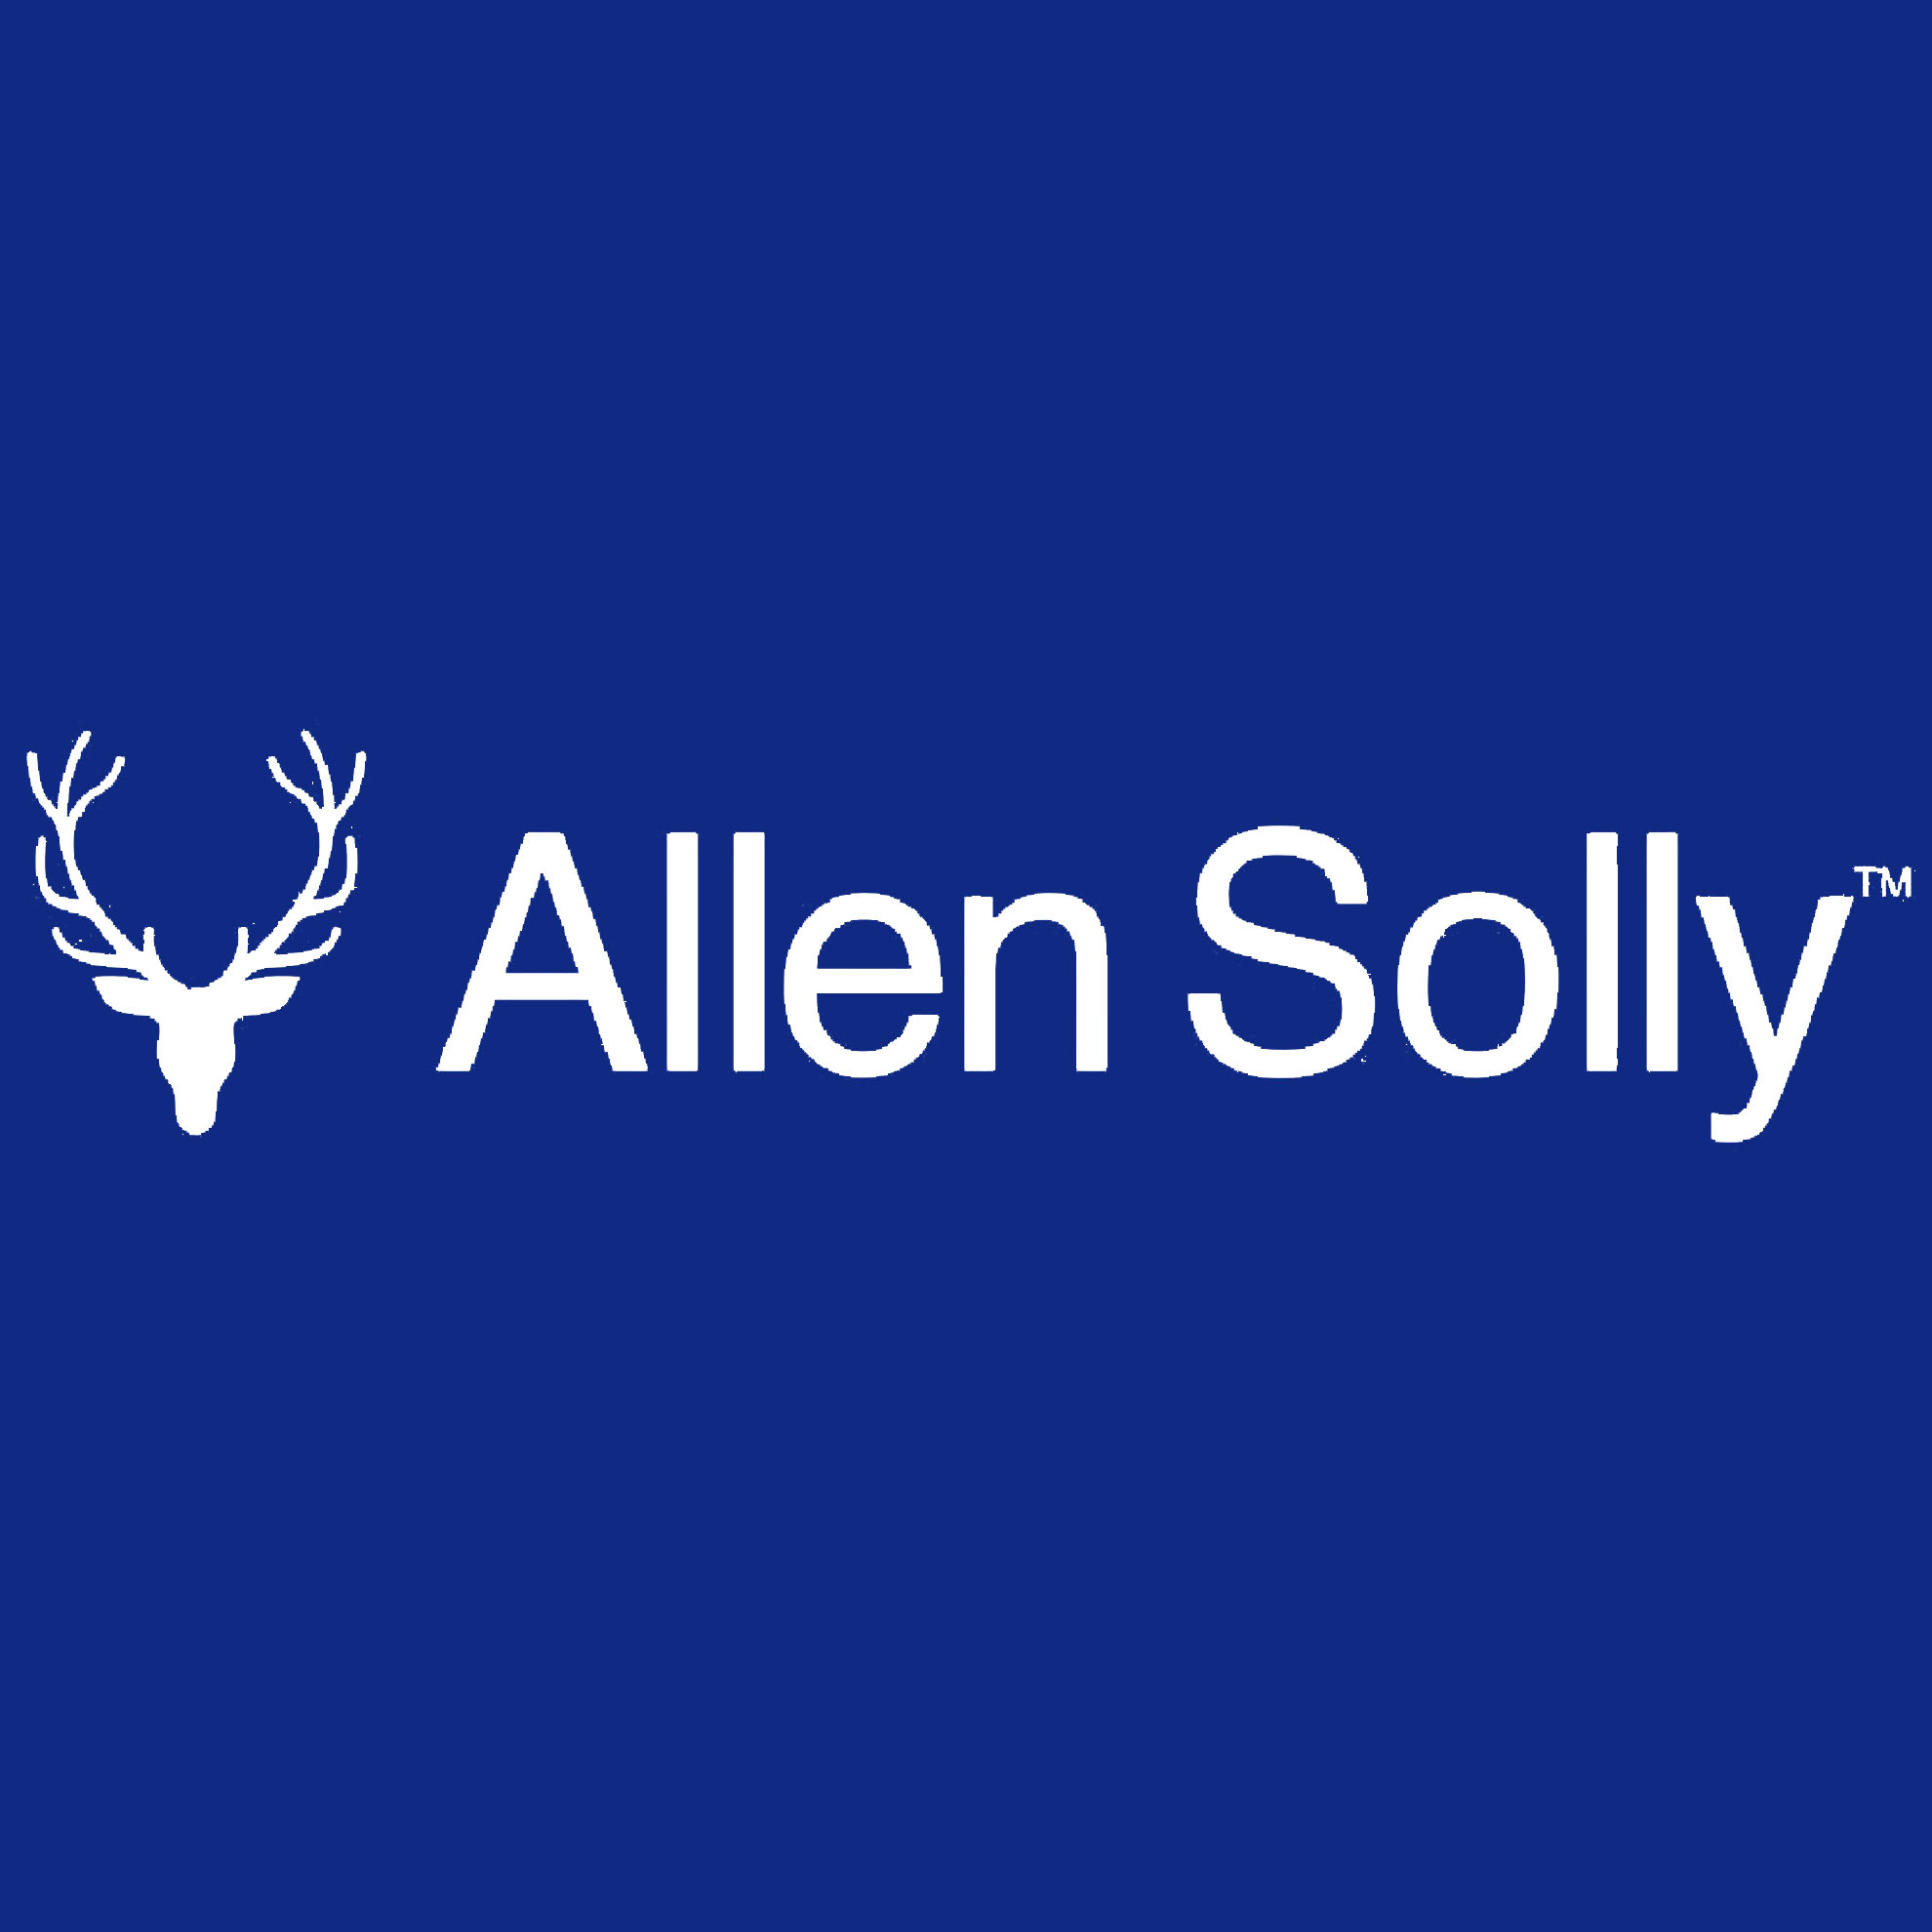 Allen Solly Logo  01 - PNG Logo Vector Downloads (SVG, EPS)